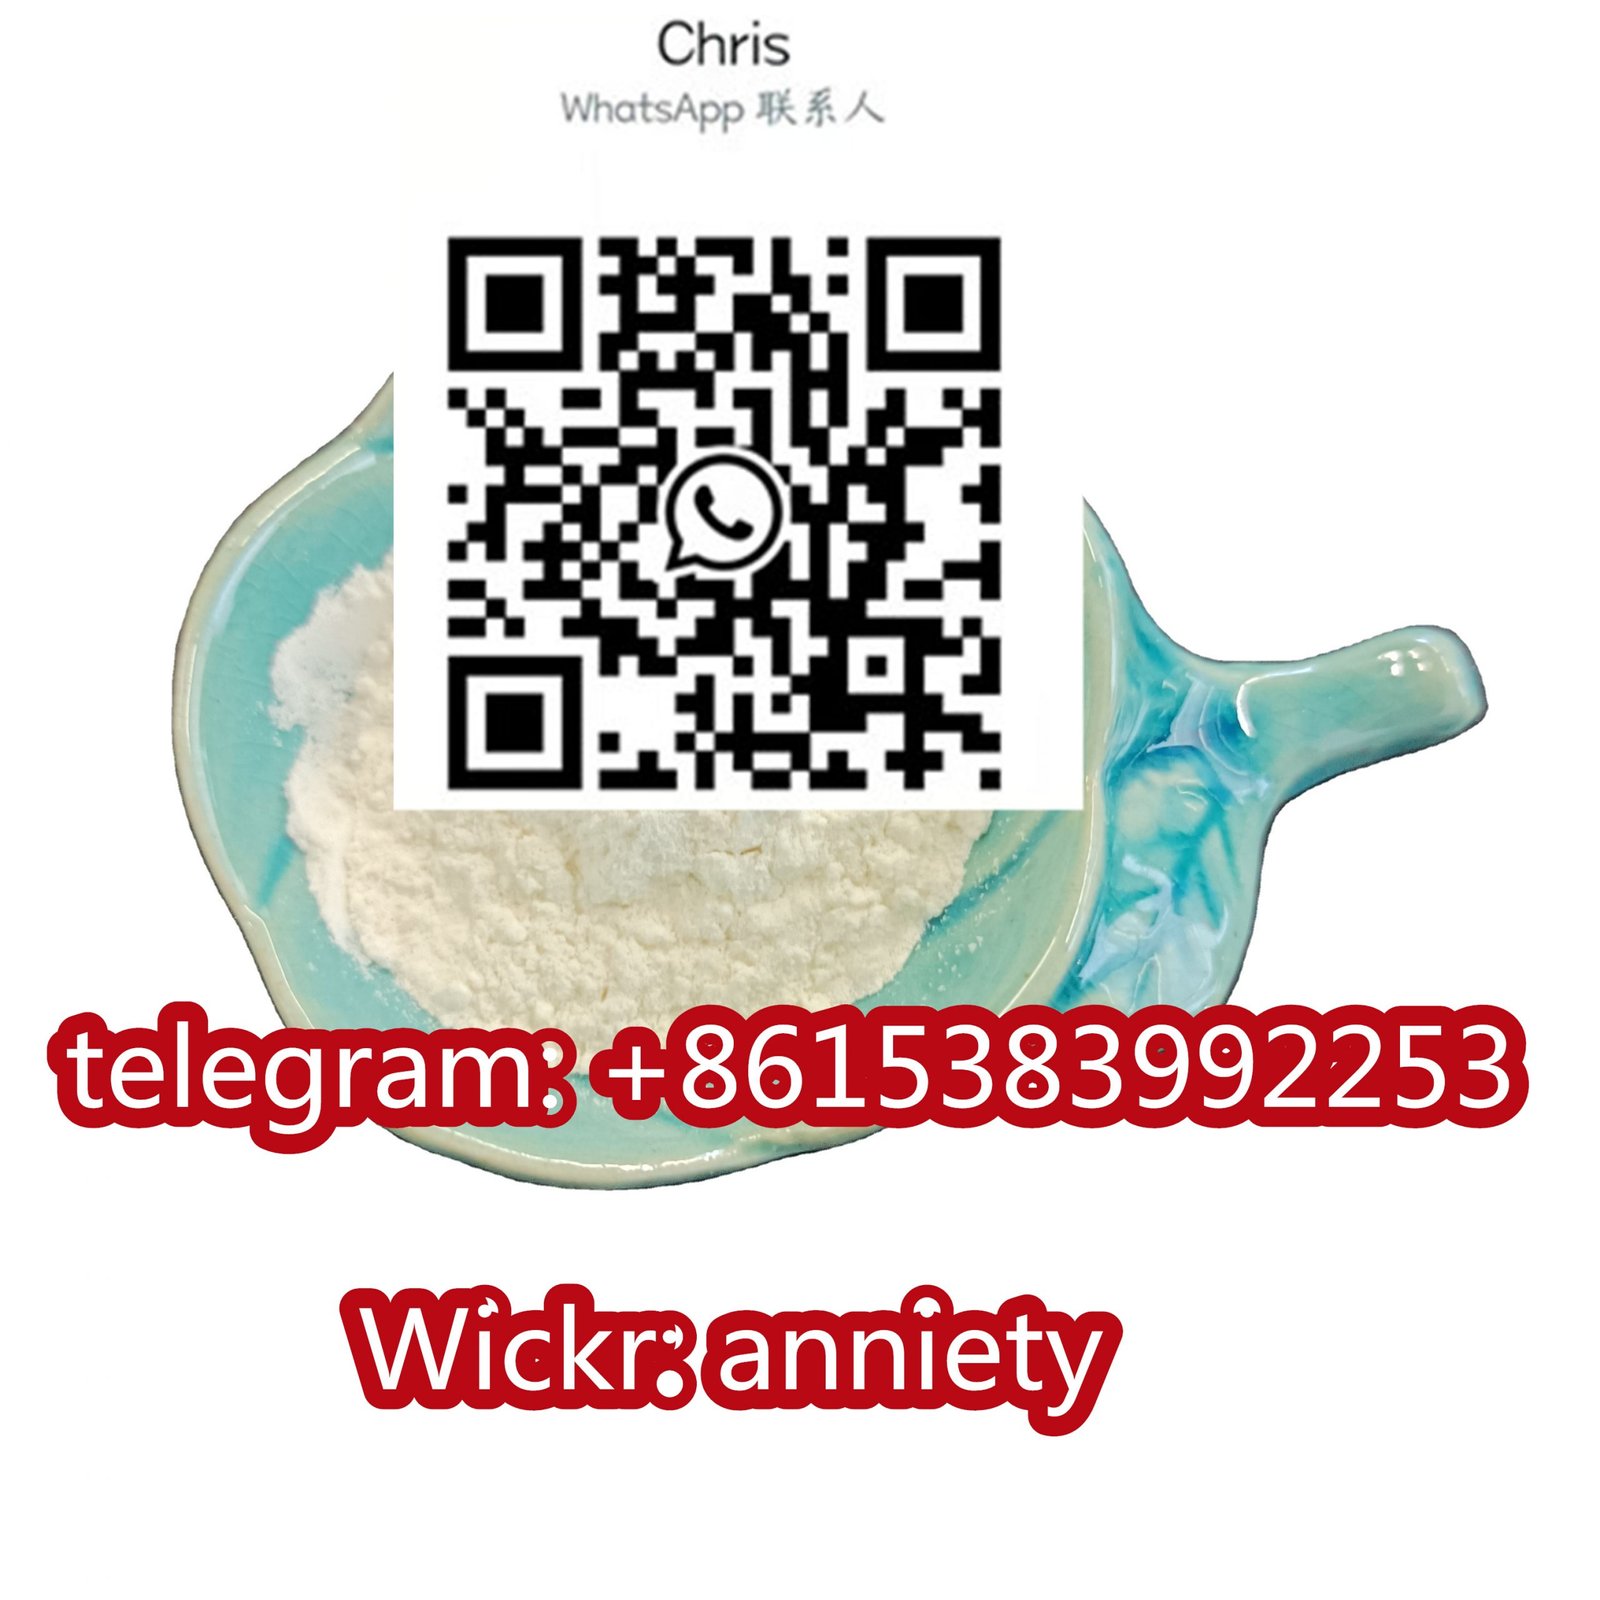 wickr: anniety 2-iodo-1-p-tolyl-propan-1-one cas 236117-38-7